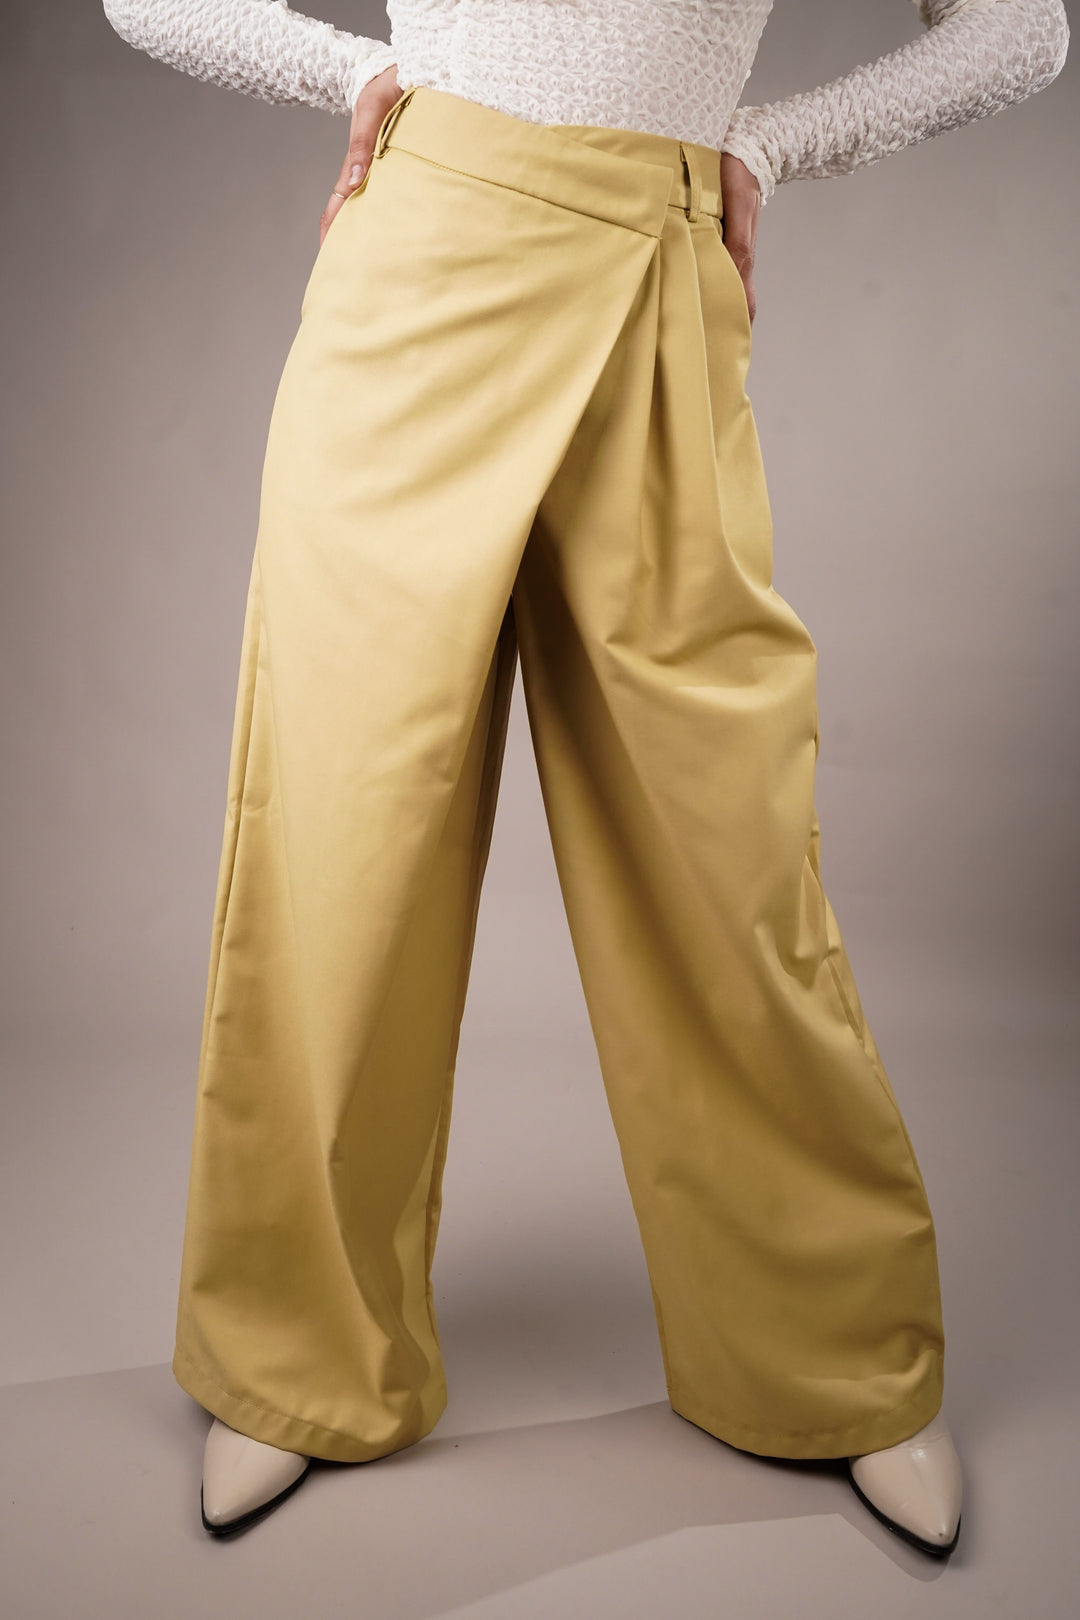 Tailored Yellow Asymmetrical Pants